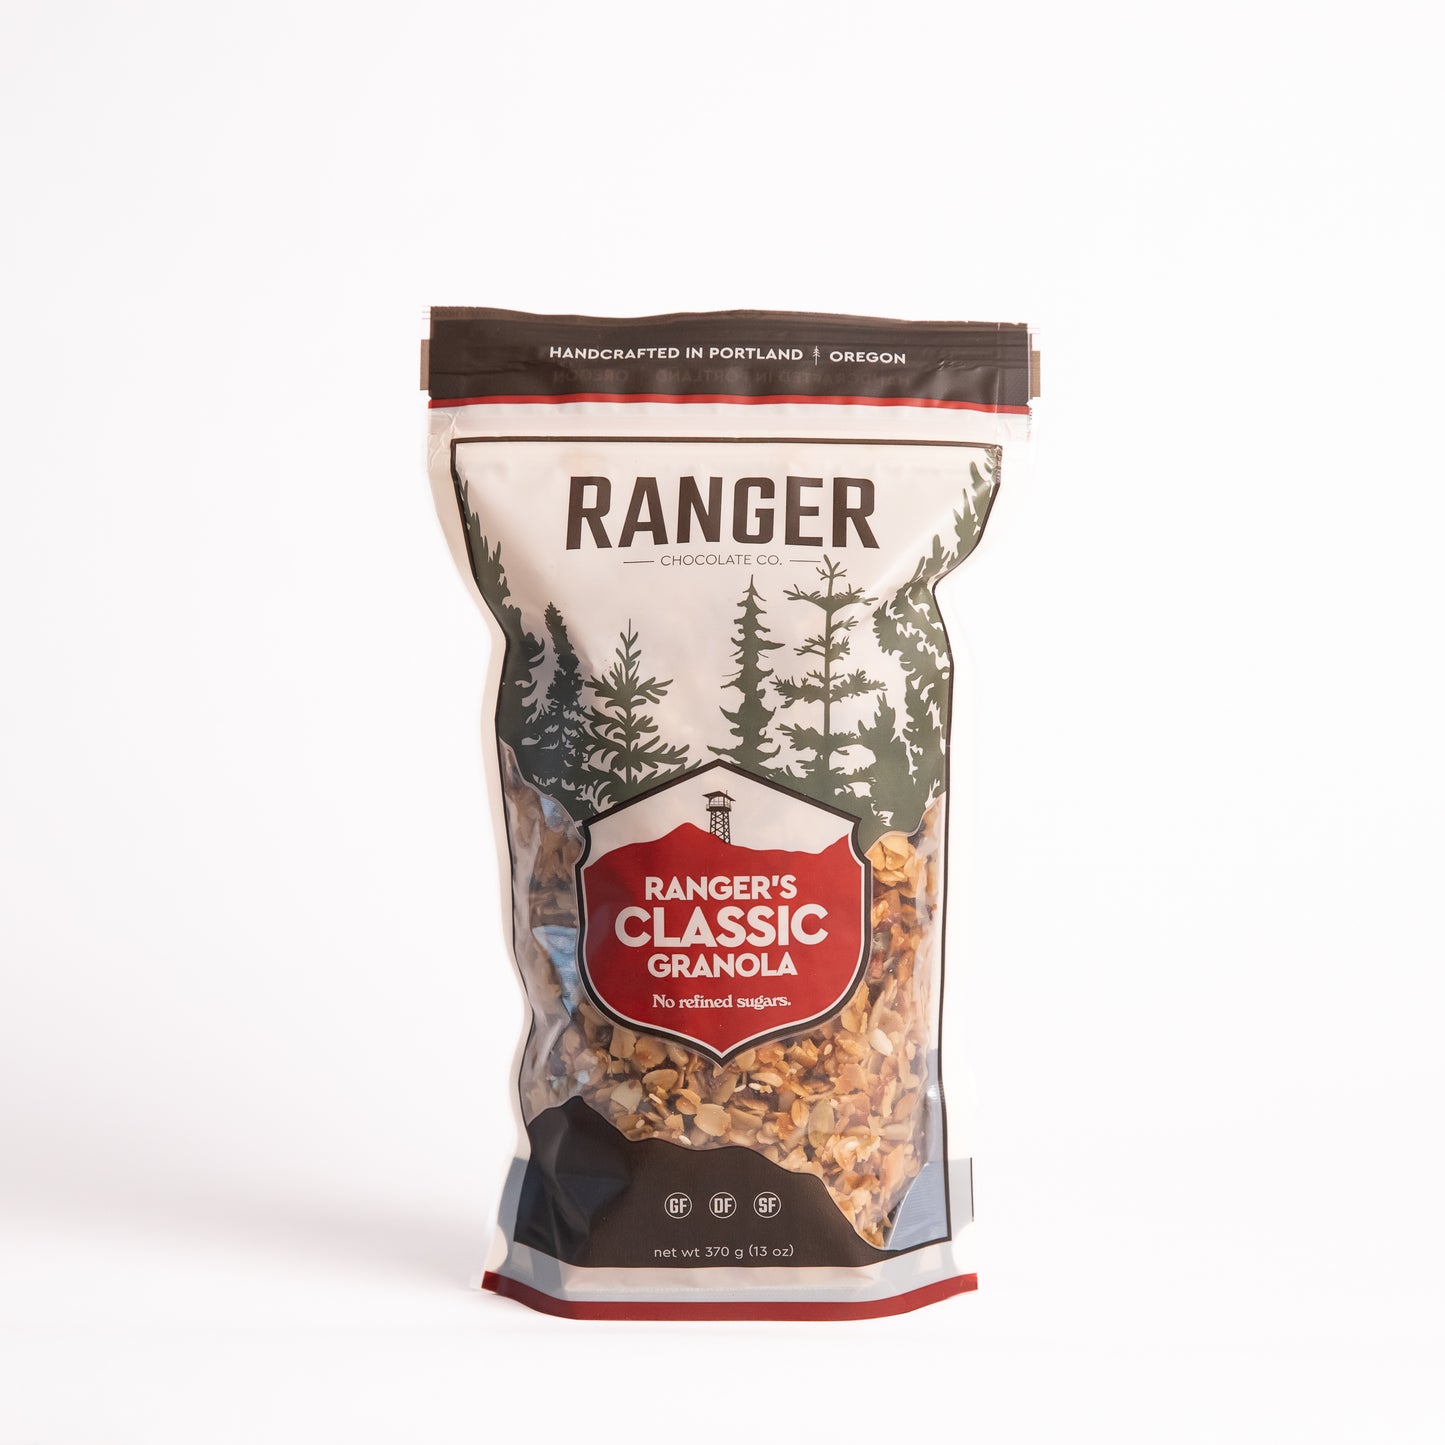 Ranger's Classic Granola